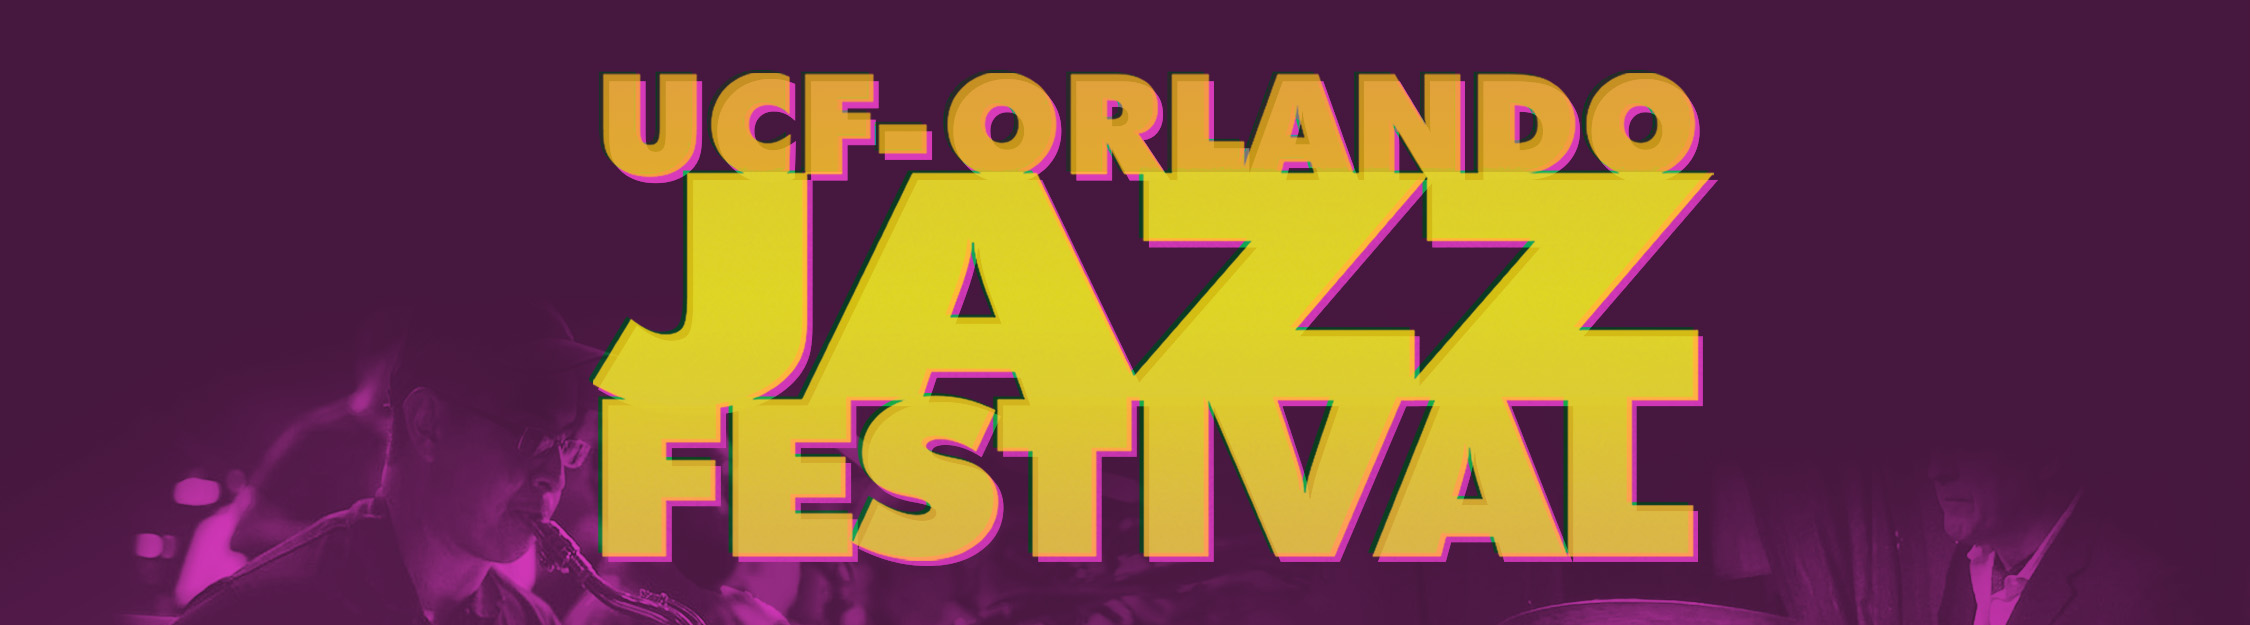 UCF-Orlando Jazz Festival typographic logo